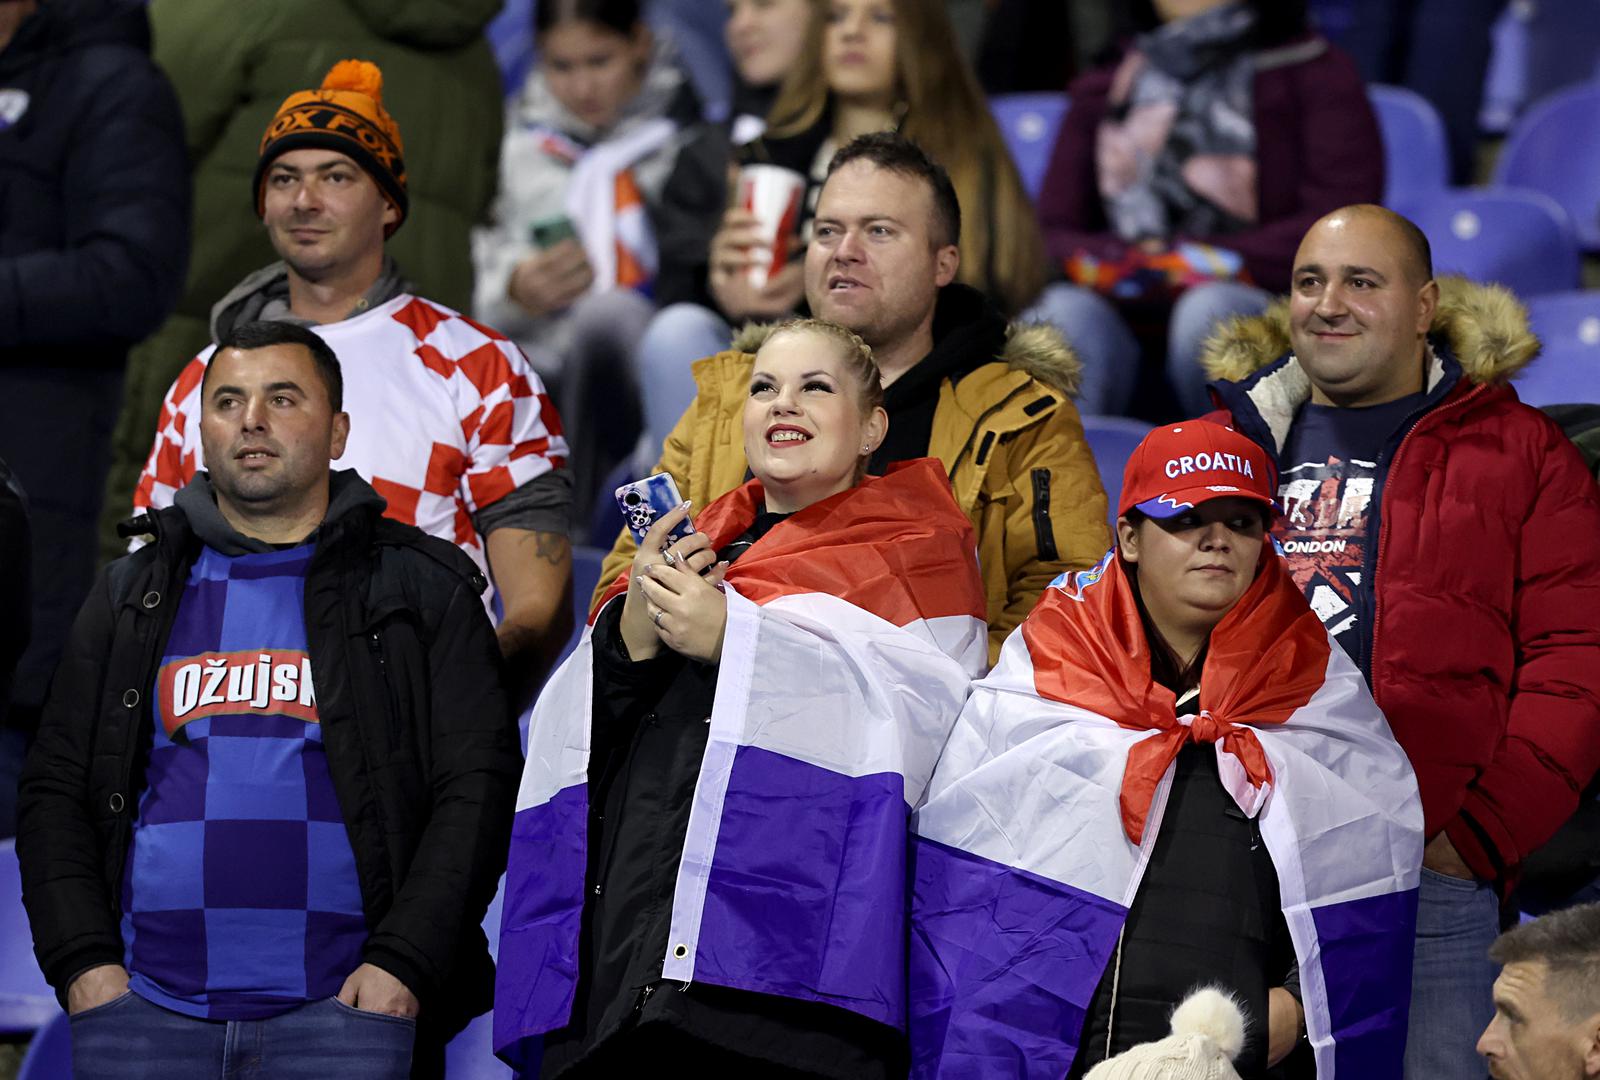 21.11.2023., stadion Maksimir, Zagreb - Kvalifikacije za UEFA Euro 2024, skupina D, Hrvatska - Armenija. Photo: Goran Stanzl/PIXSELL